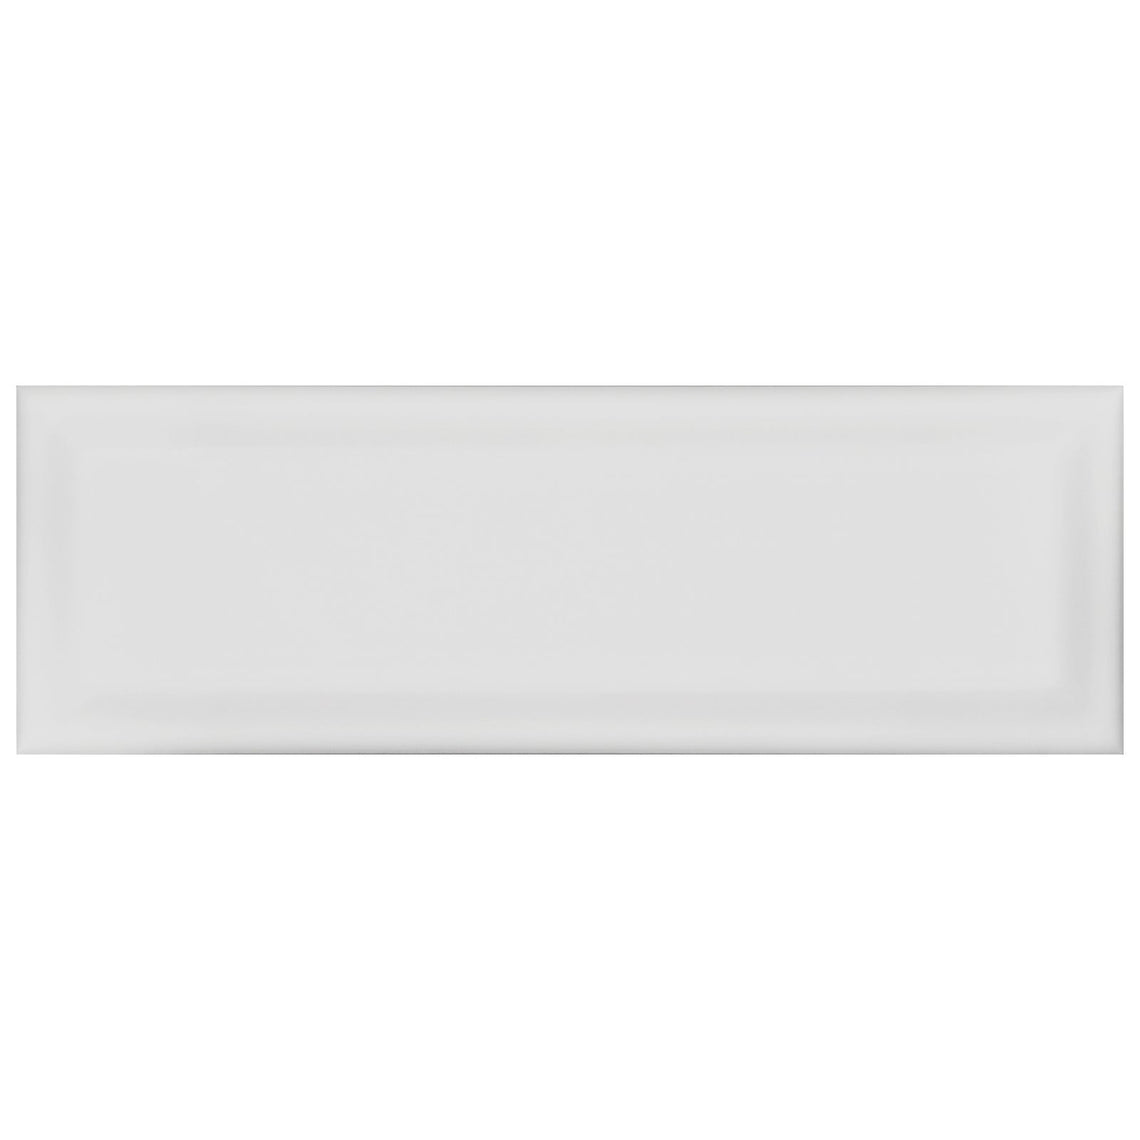 4 X 12 In Beveled Soho Gallery Grey Light Colors Glossy Pressed Glazed Ceramic